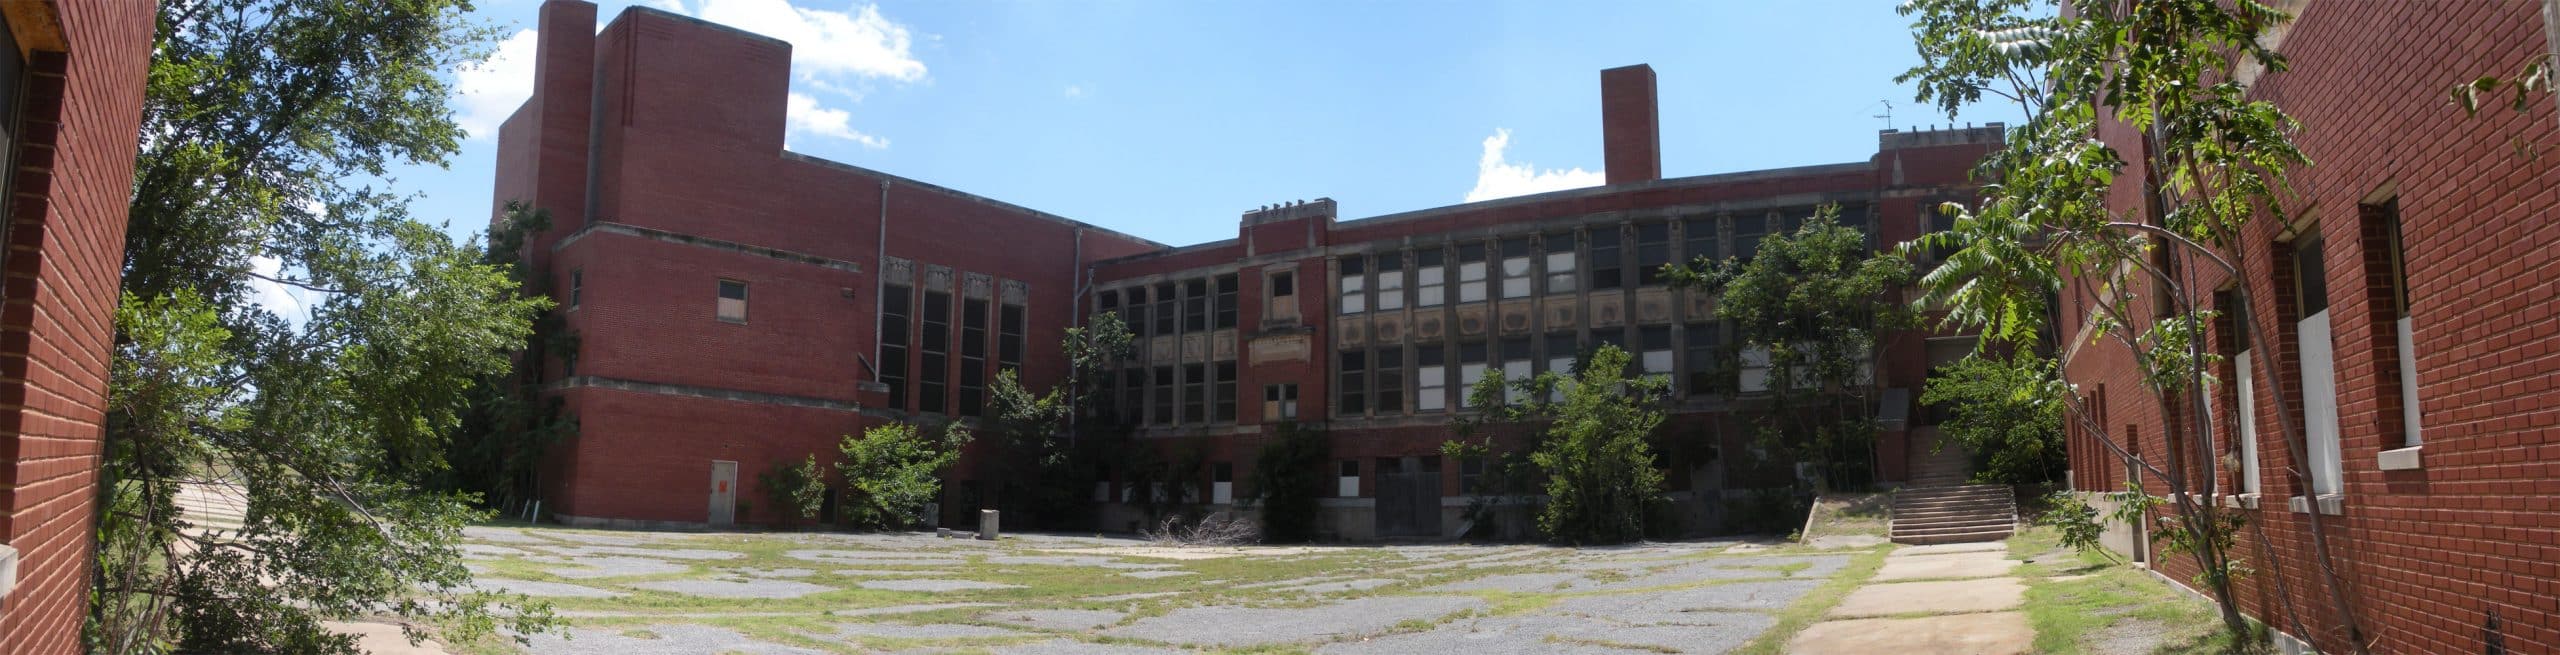 Washington Separate School